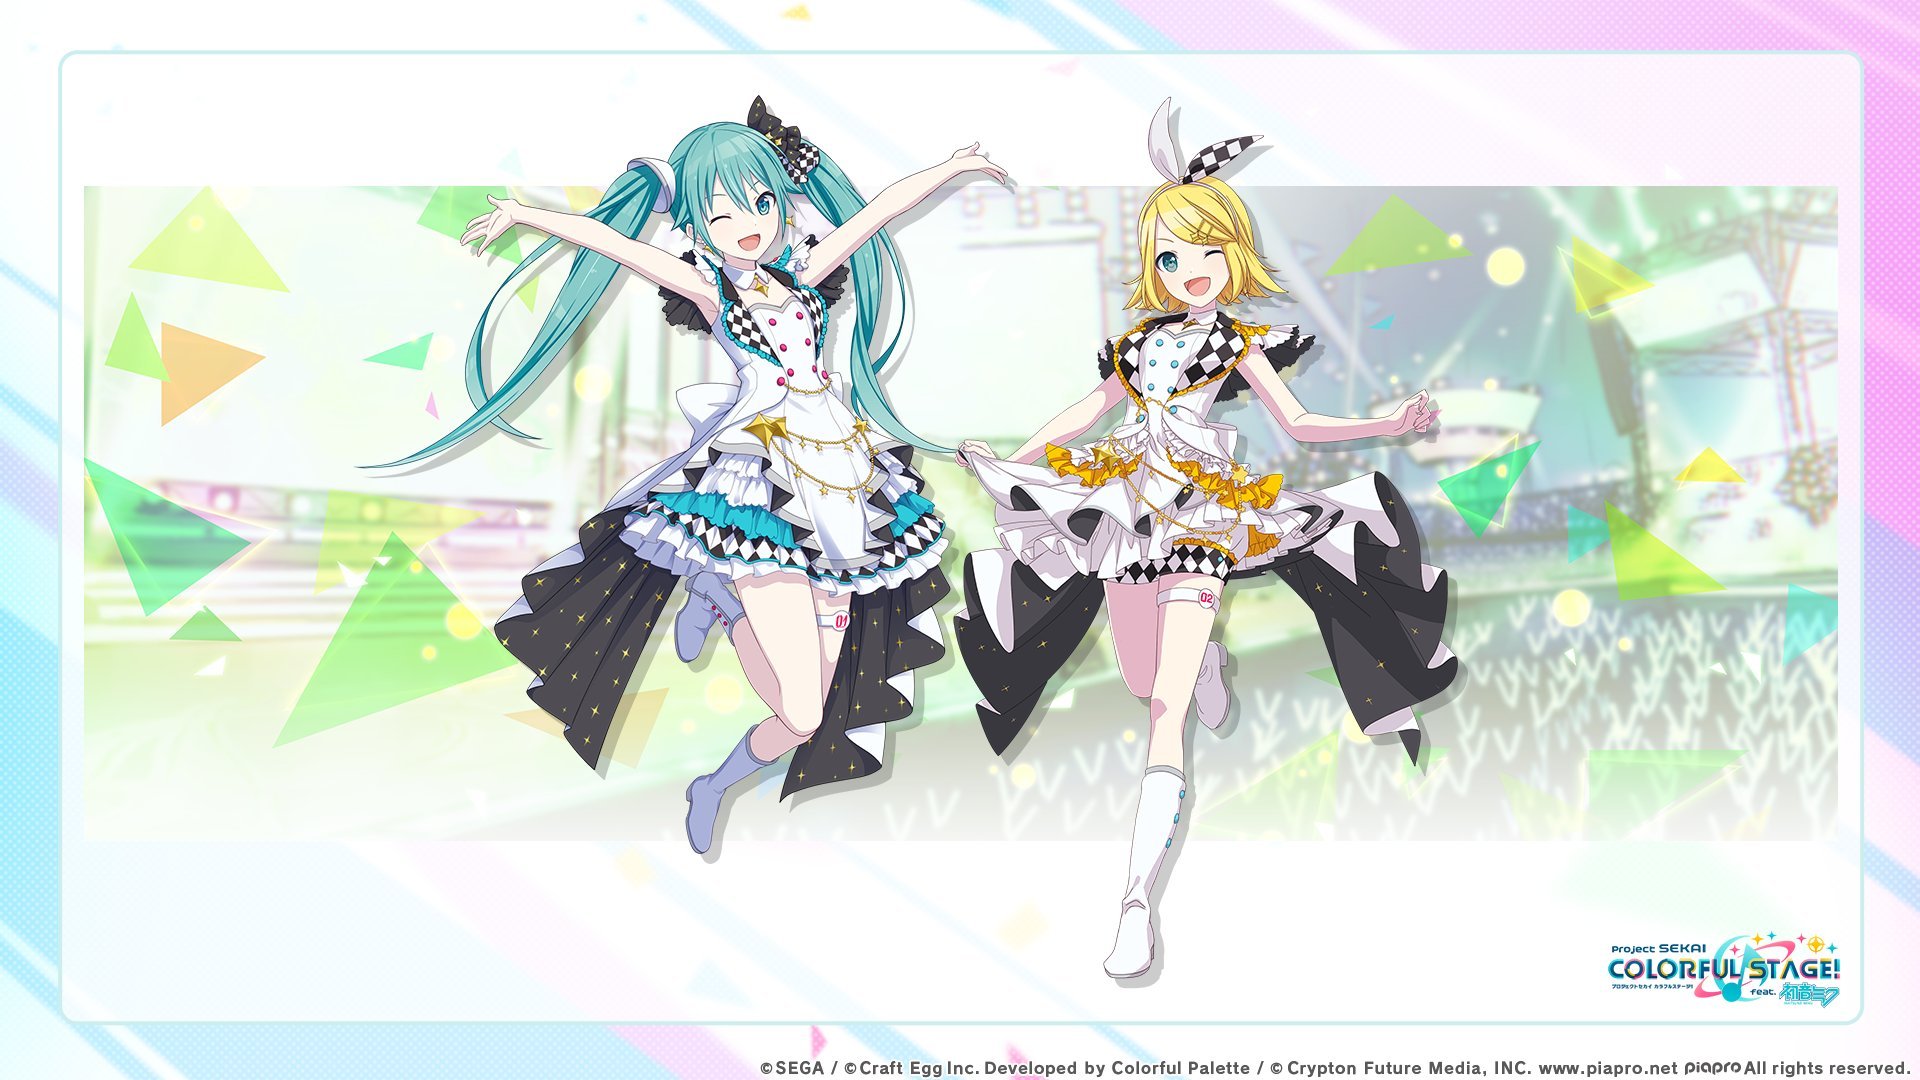 Project Sekai Colorful Stage! feat. Hatsune Miku (Hatsune Miku: Colorful Stage!) Games Anime Image Board